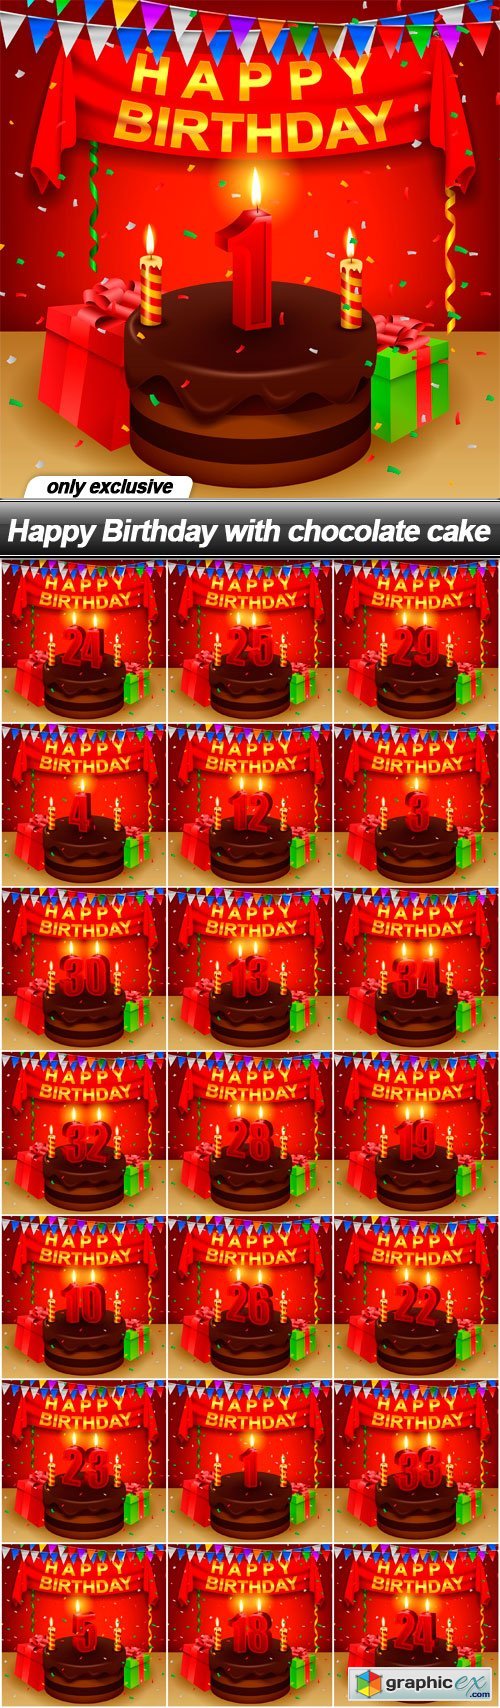 Happy Birthday with chocolate cake - 20 EPS